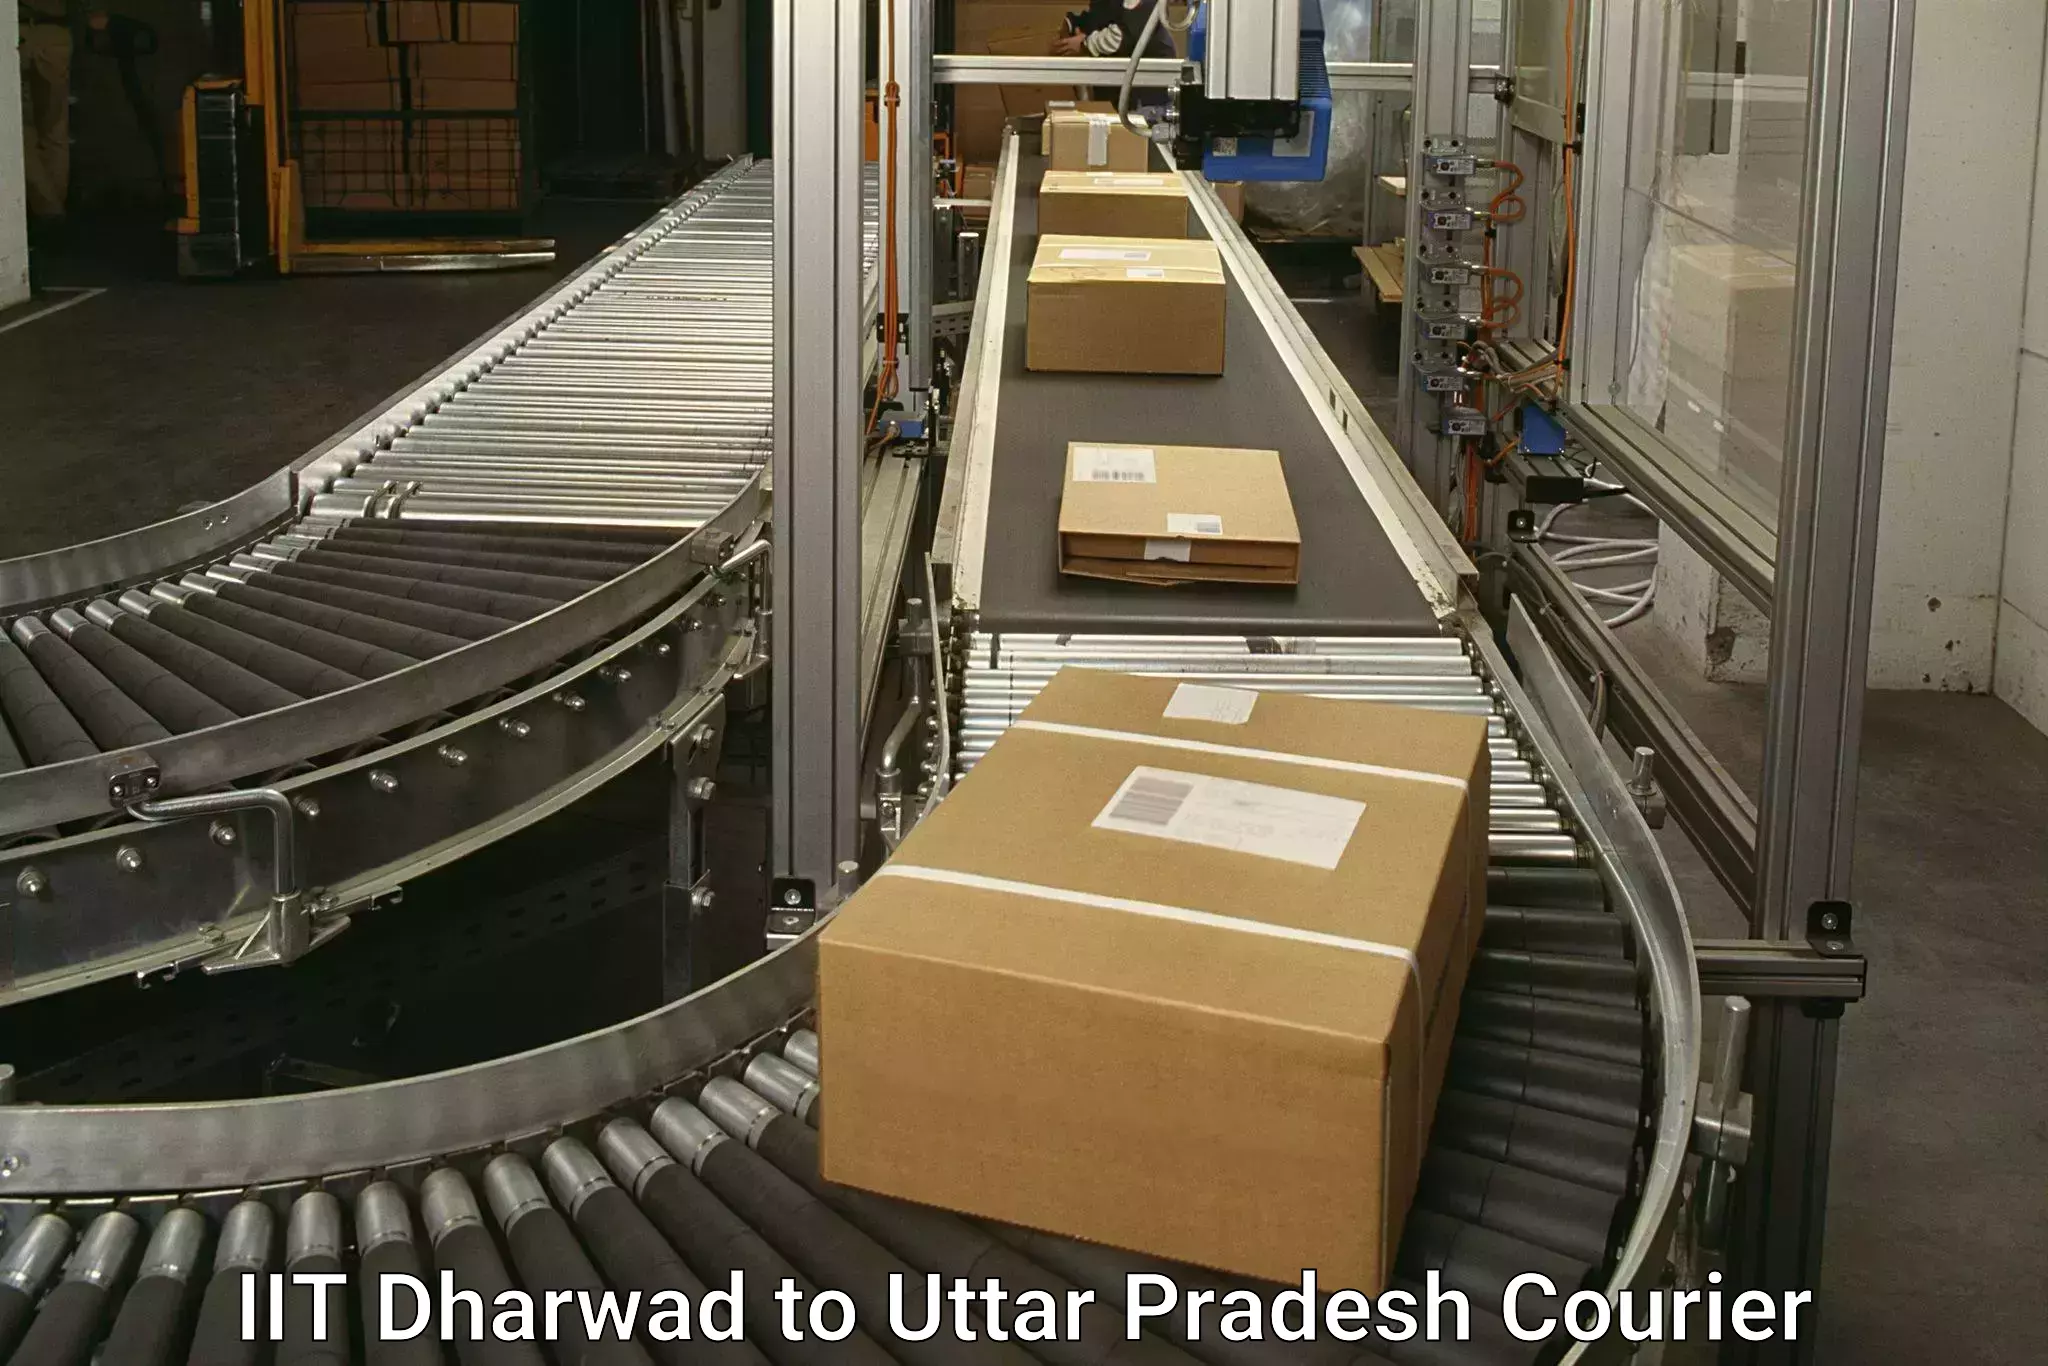 Local delivery service IIT Dharwad to Ambedkar Nagar